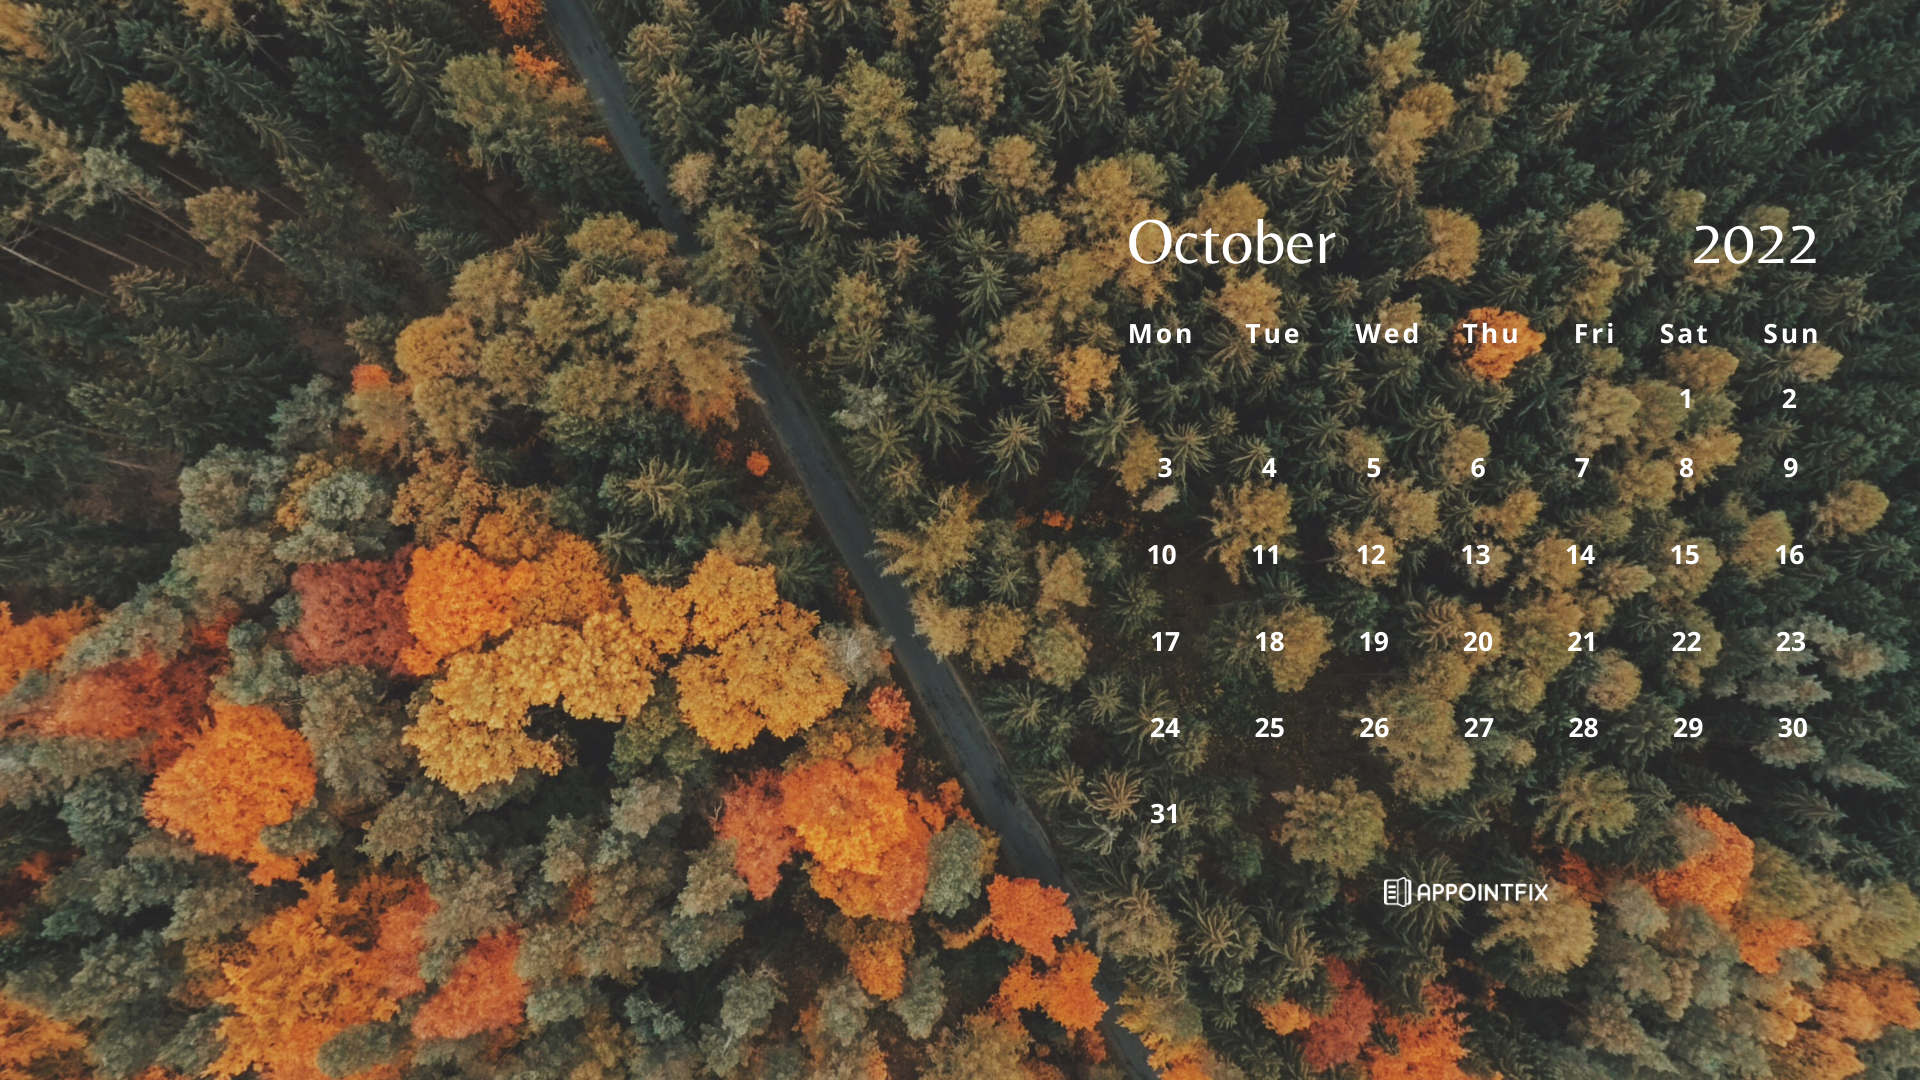 Free October 2022 Wallpaper Calendars